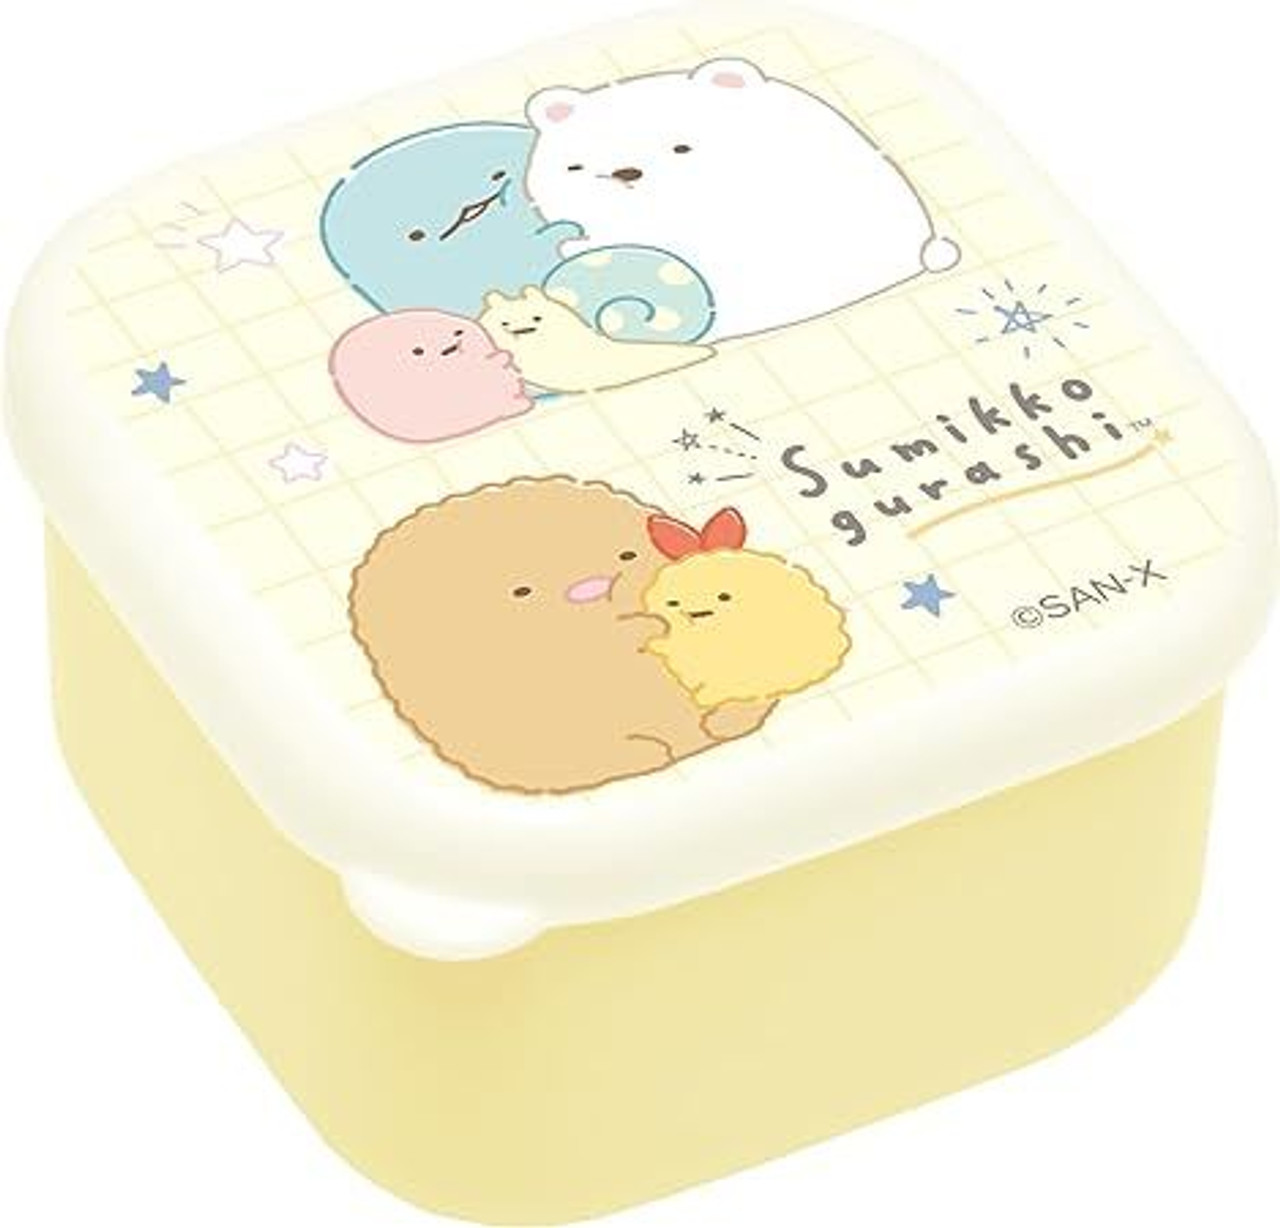 Sumikko Gurashi Set of 2 Mini Lunch Box (Gyumu Gyumu Squeeze)